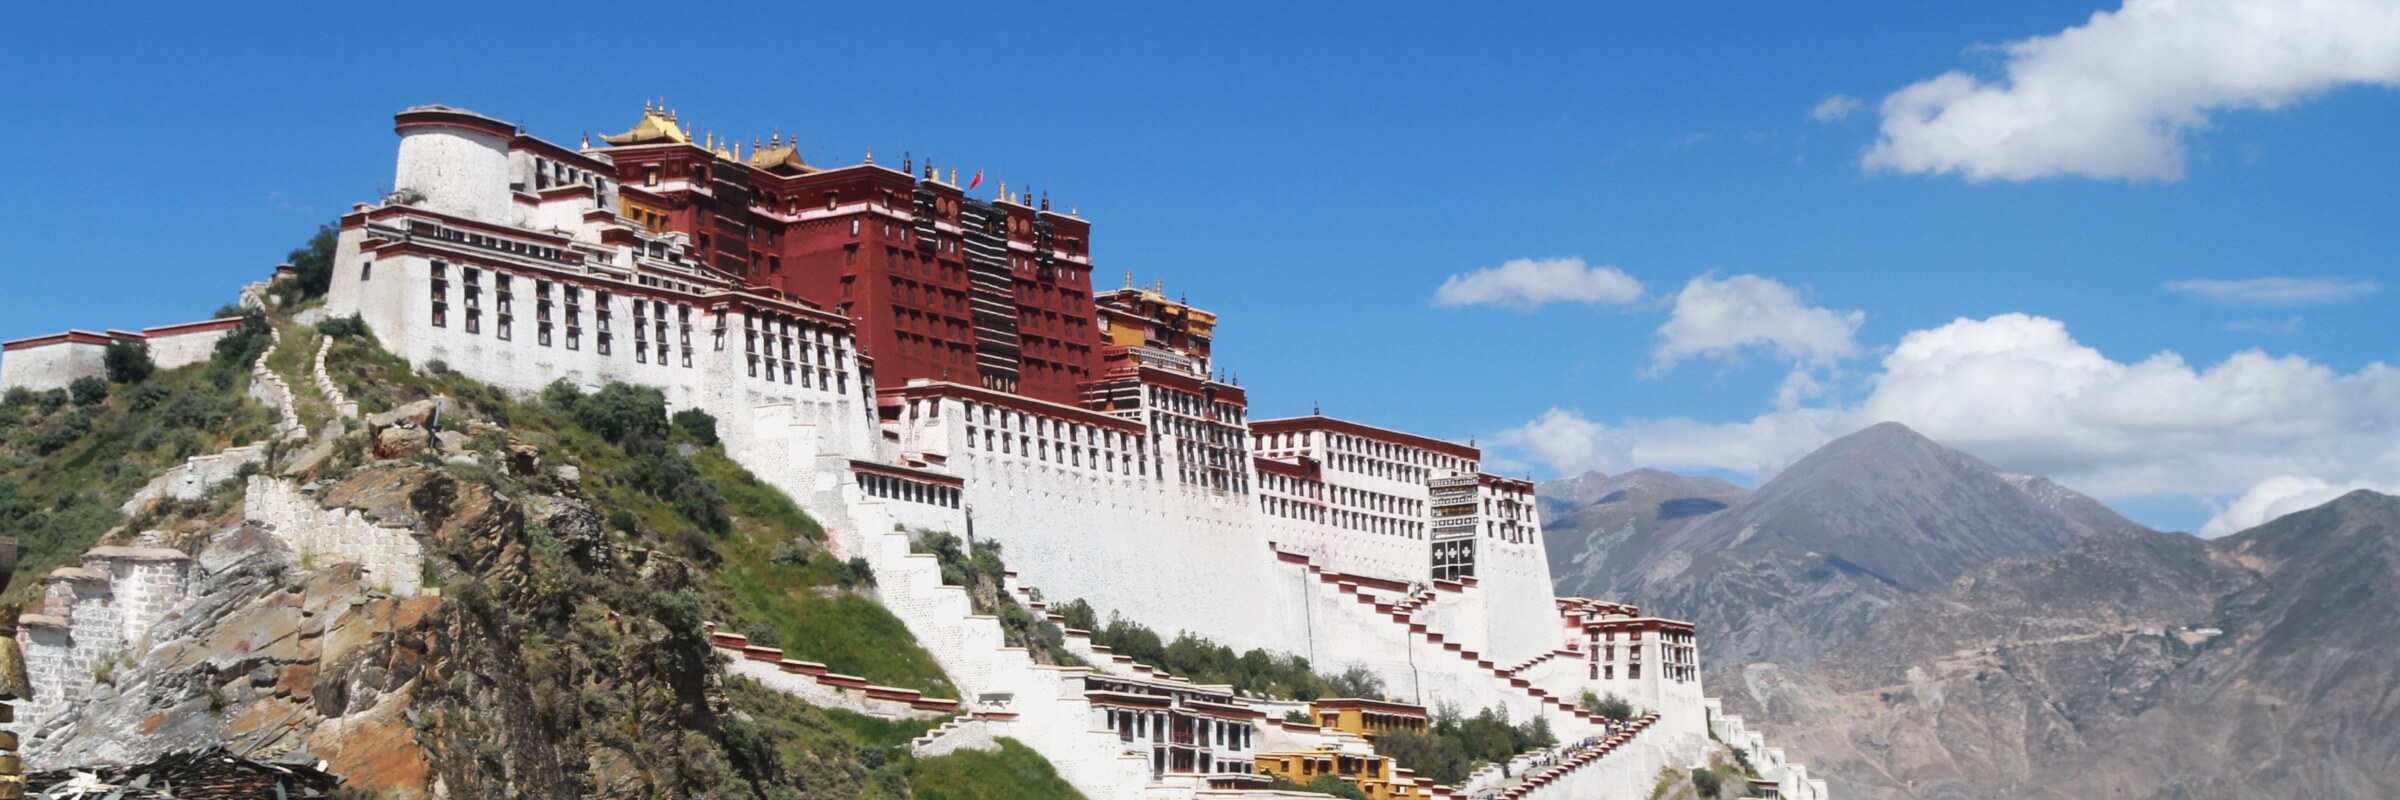 Der Potala Palast ist die ehemalige Residenz des Dalai Lama.